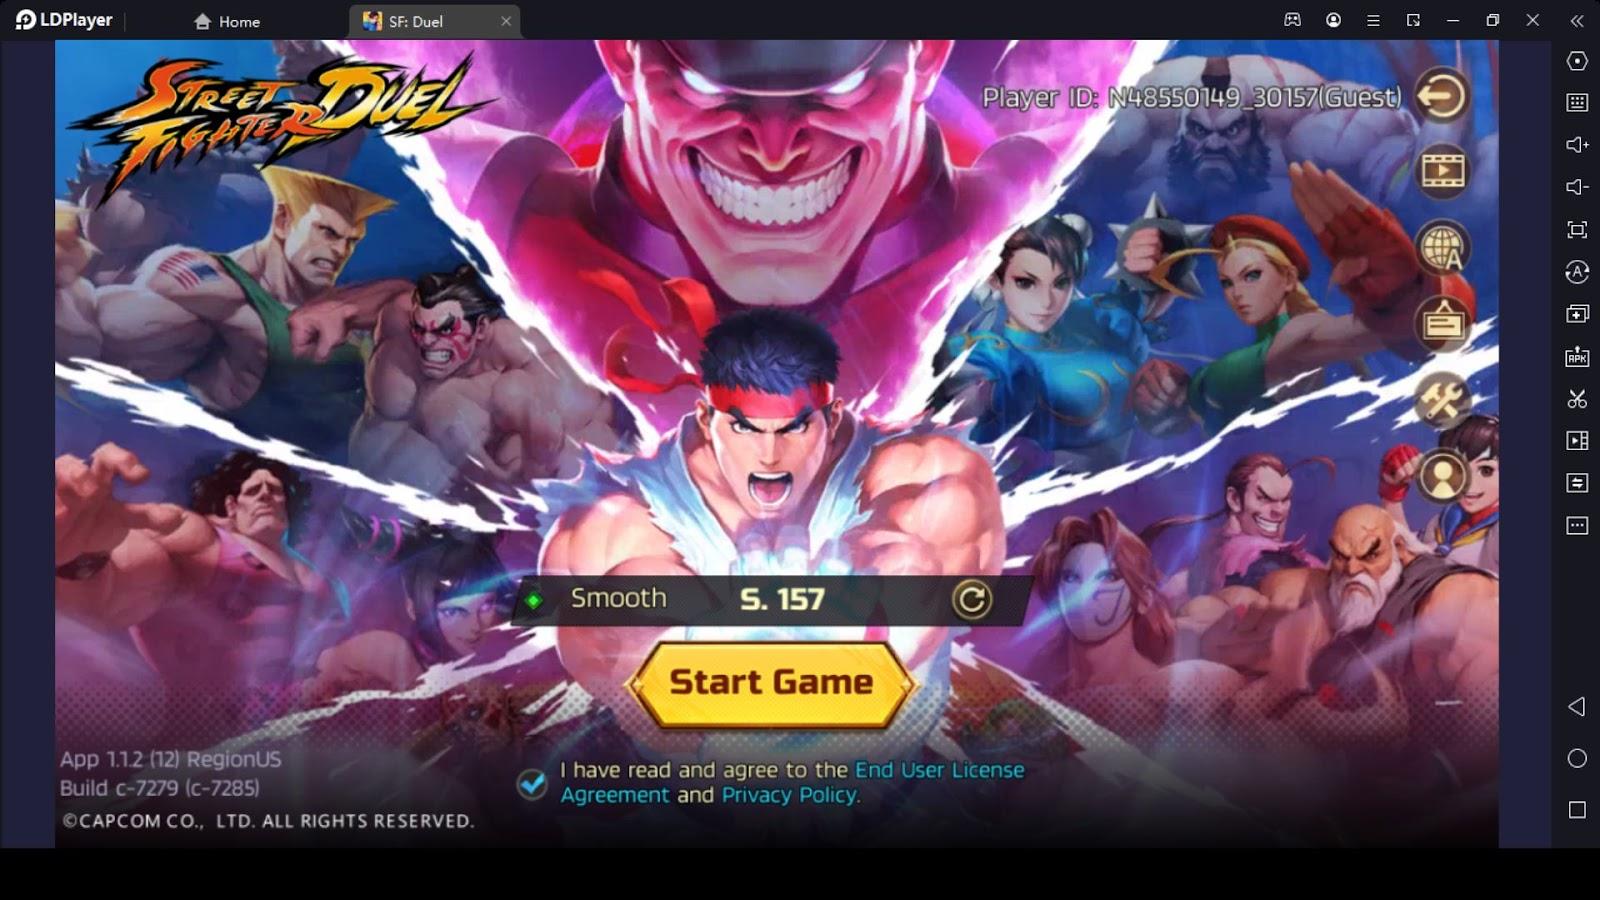 Street Fighter Duel Preregistration Open